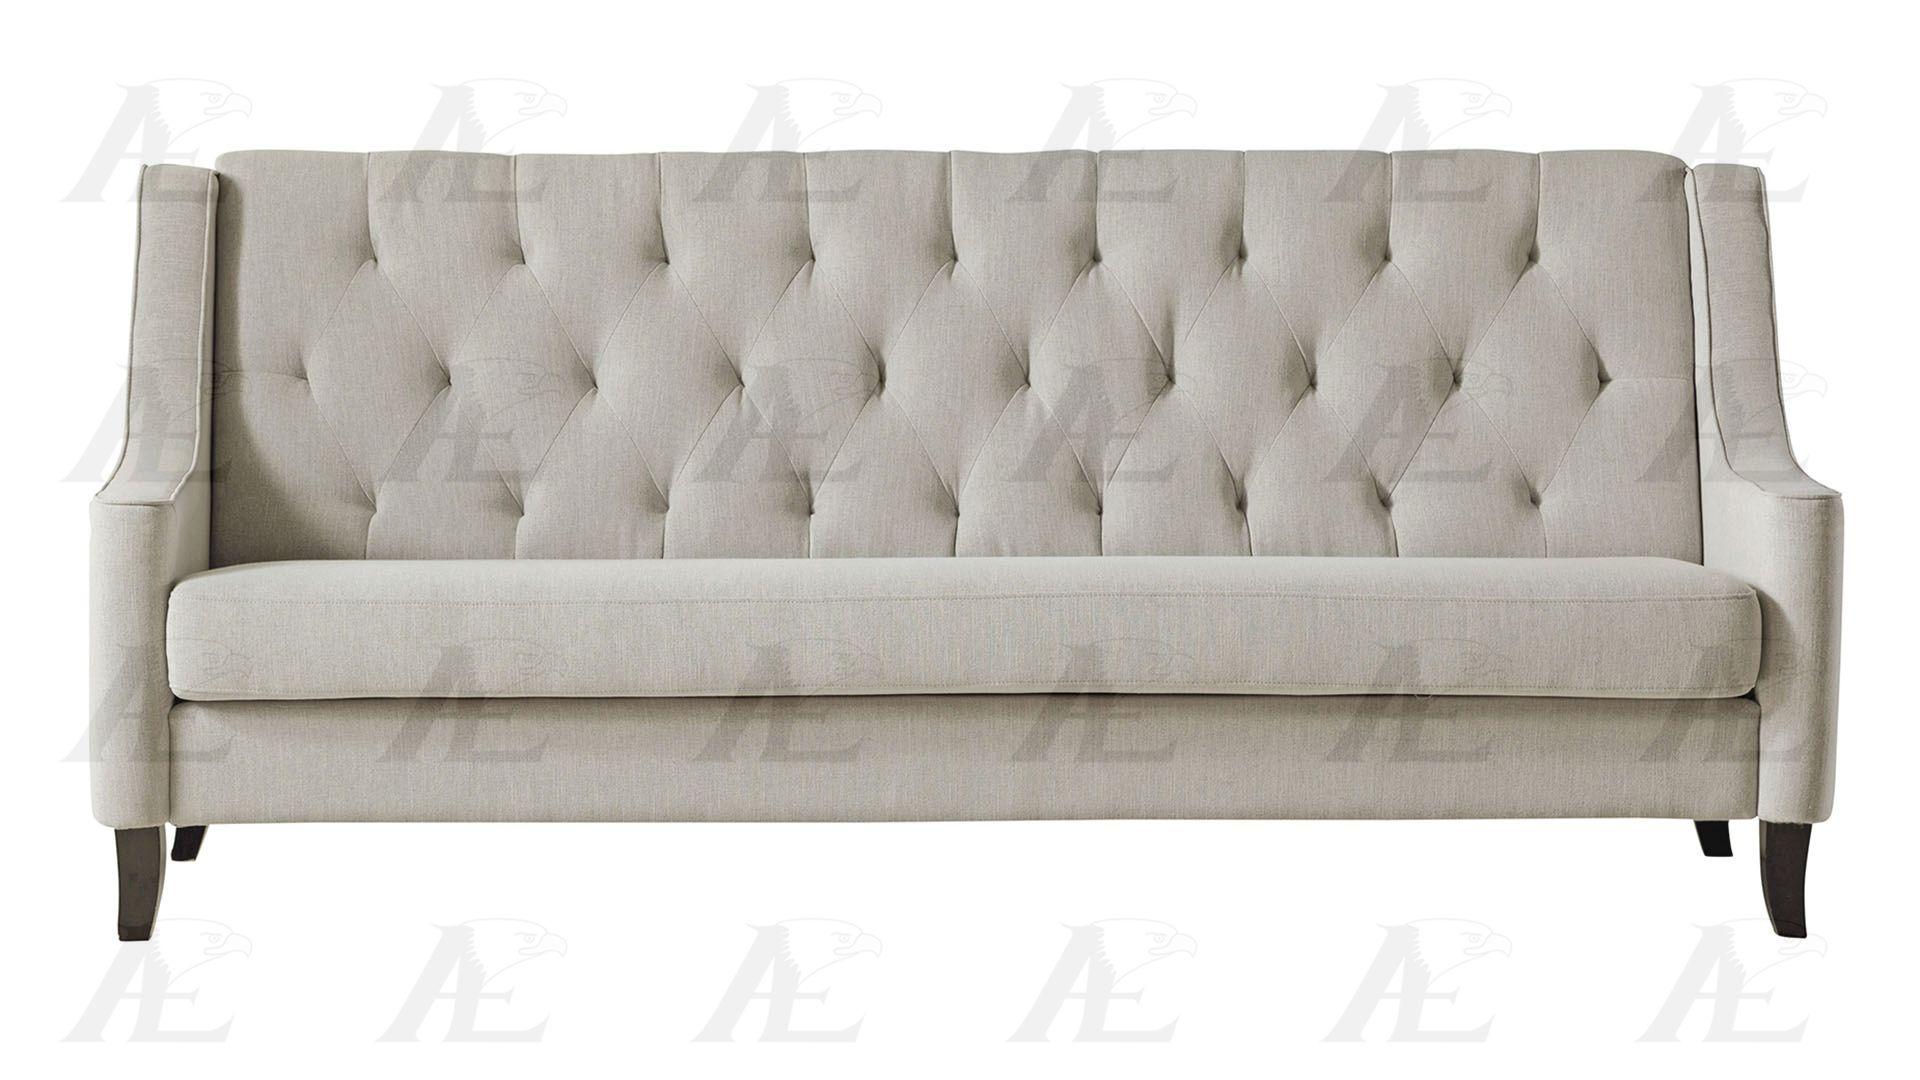 

    
American Eagle Furniture AE2372-LG Light Gray Fabric Tufted Sofa and Loveseat Set Contemporary 2Pcs
